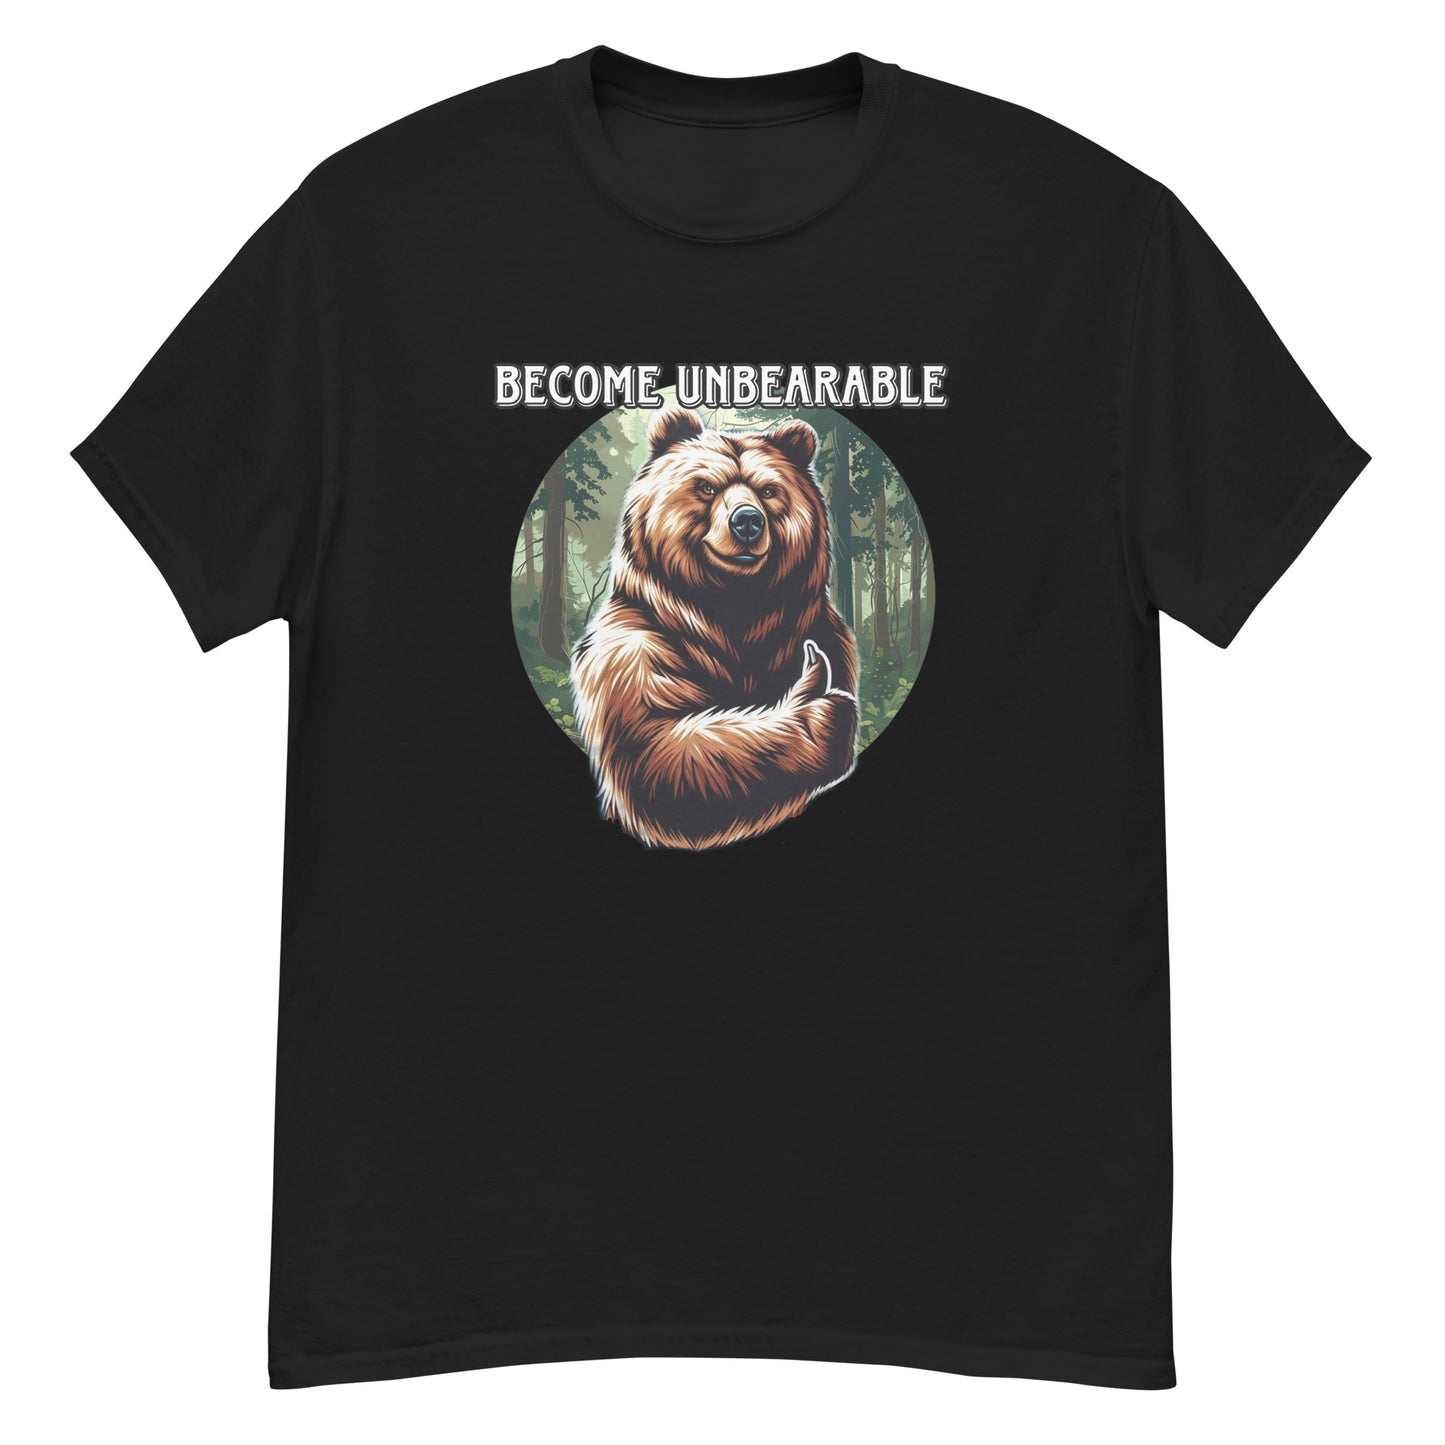 Become unbearable